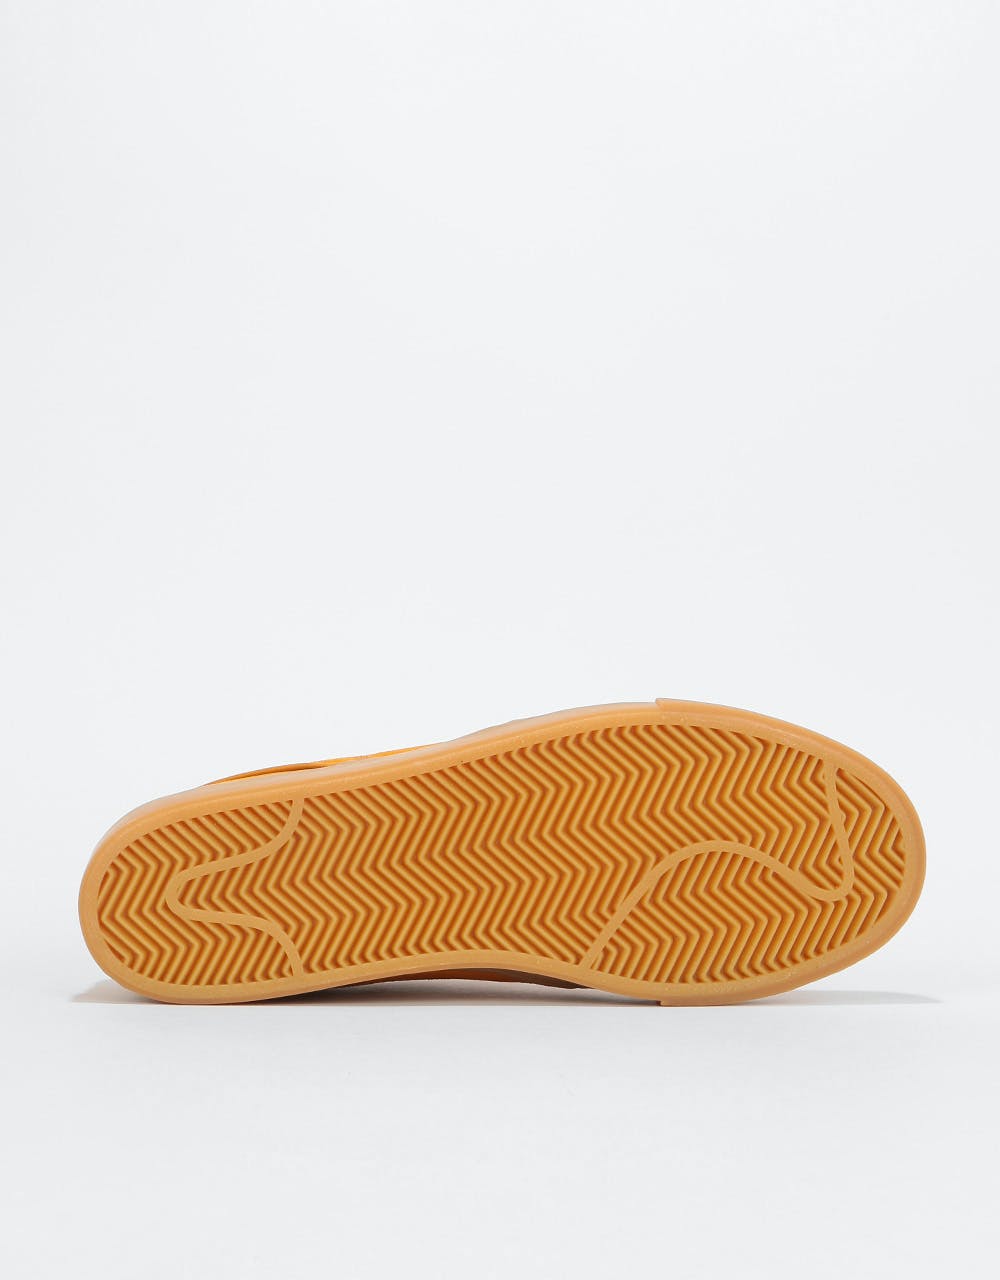 Nike SB Zoom Janoski Premium Skate Shoes - Bronze/Bronze-Gum Light Bro